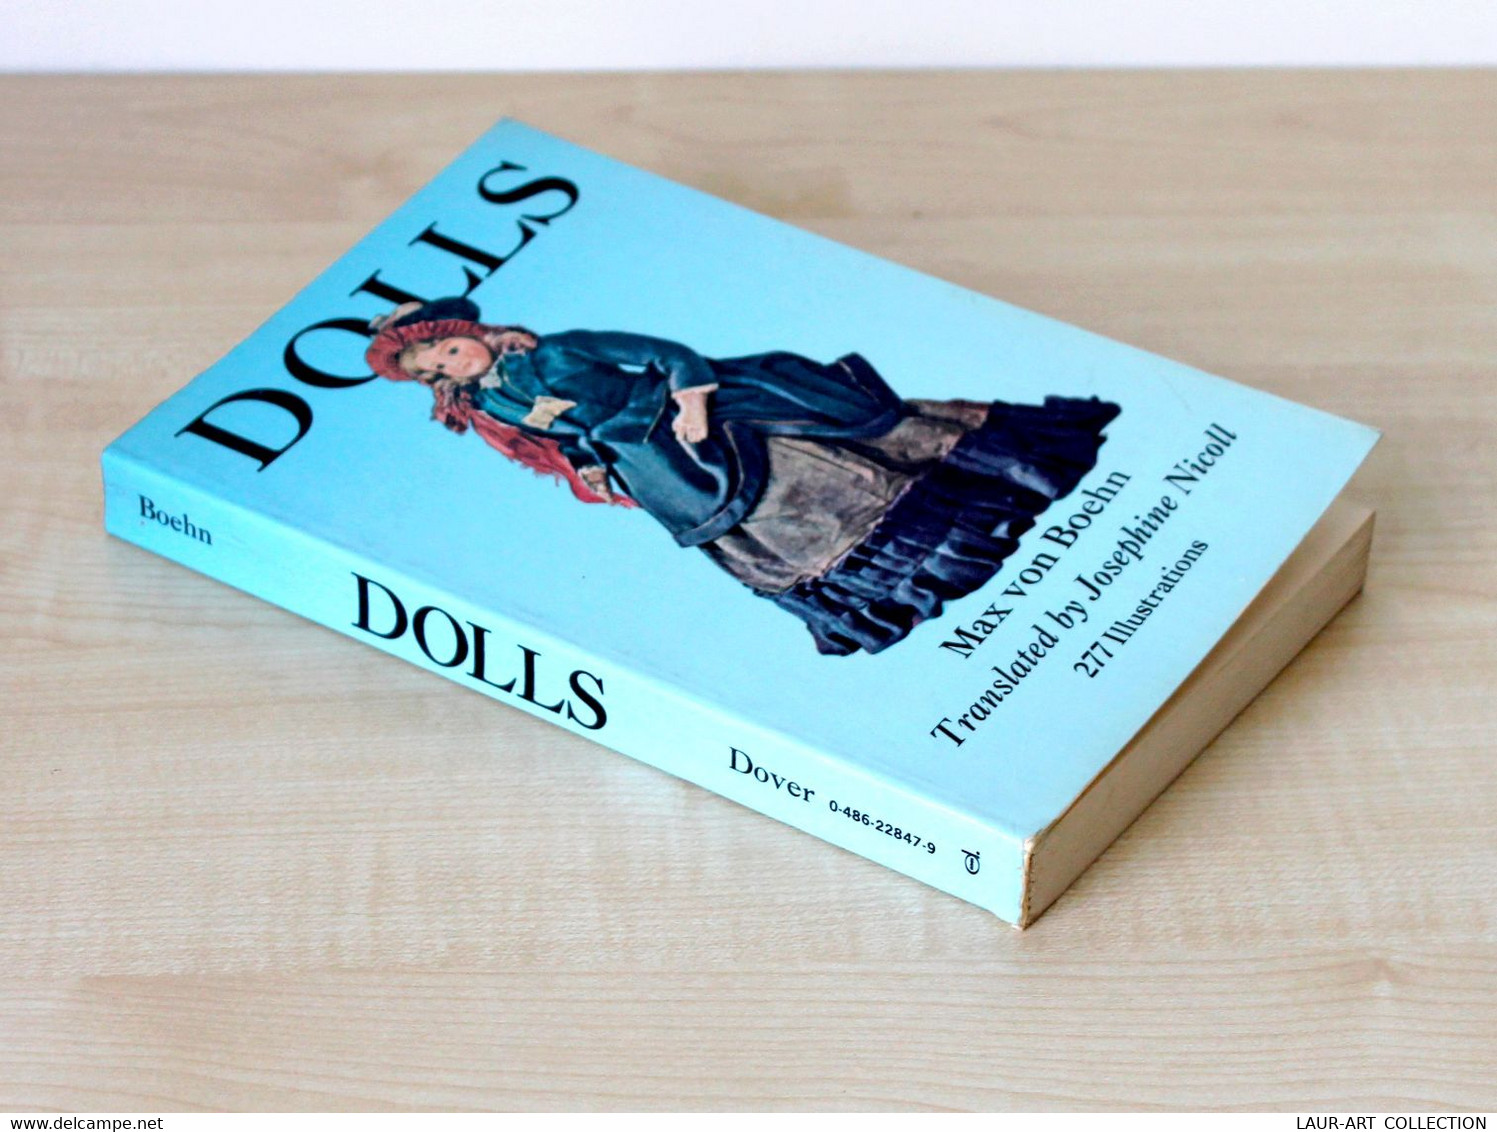 DOLLS - MAX VON BOEHN - BOOK 277 ILLUSTRATIONS  DOVER PUBLICATIONS, INC NEW-YORK         (0512.228) - Kultur